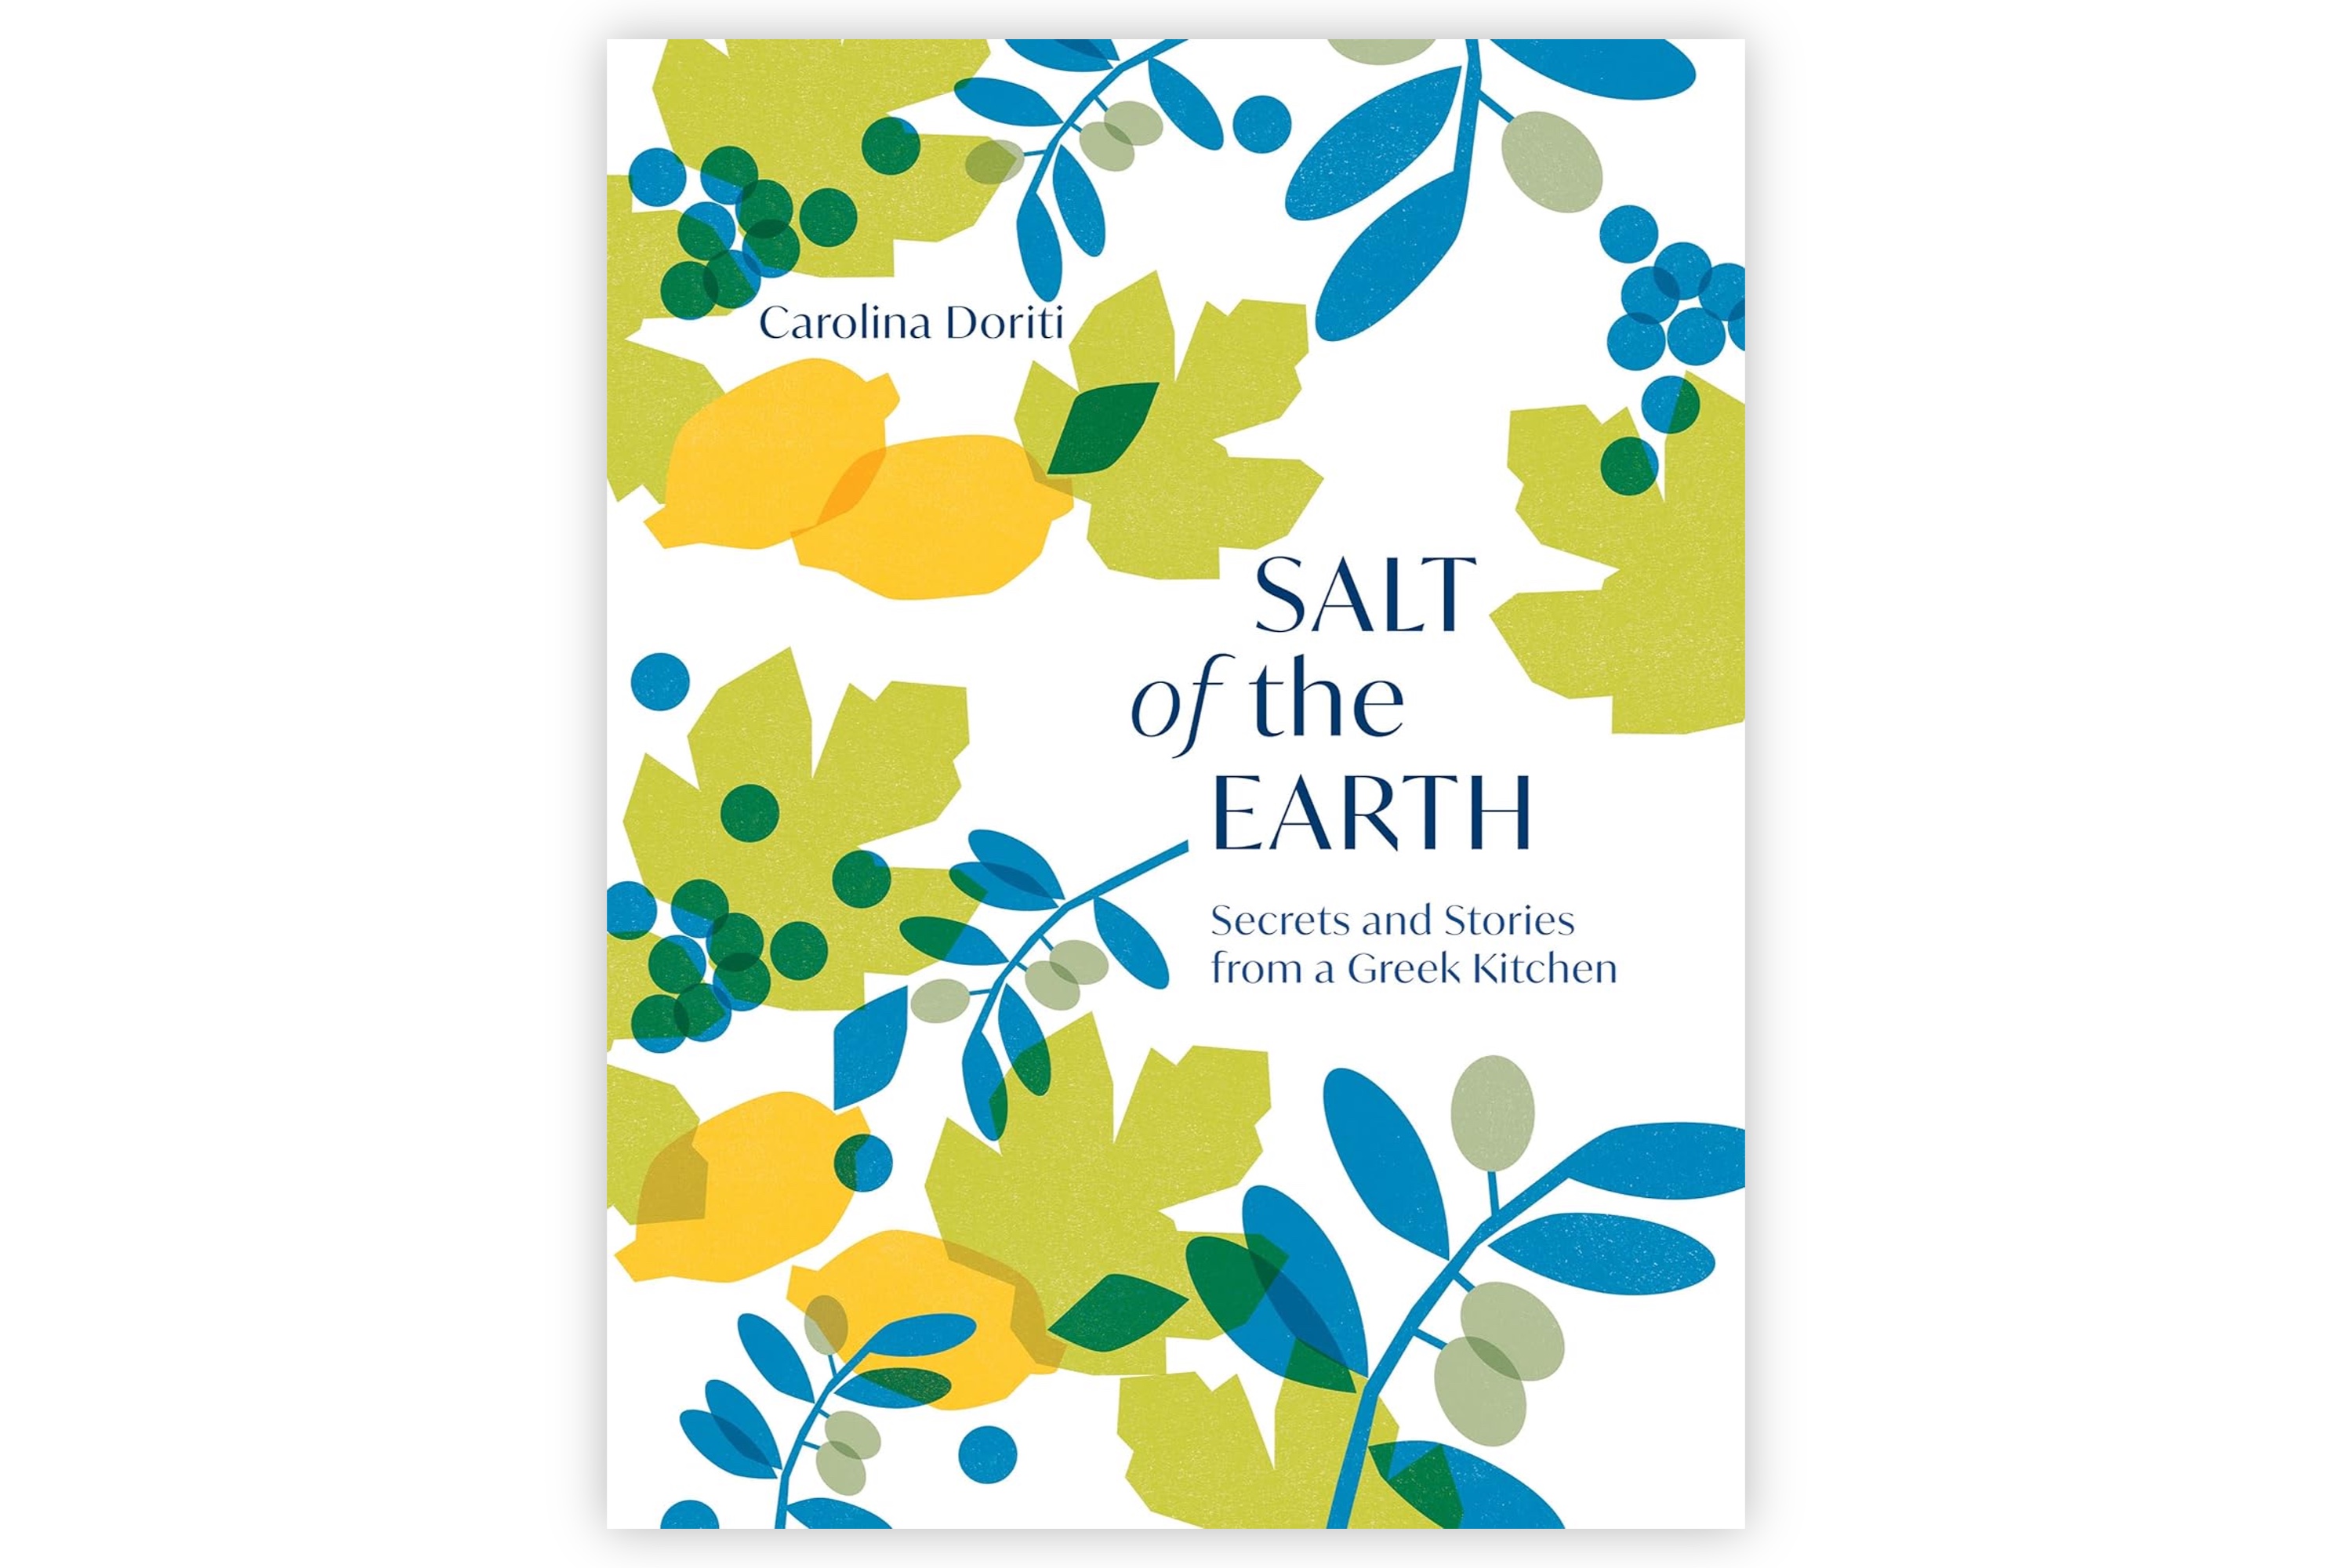 Salt of the Earth: Secrets and Stories From a Greek Kitchen / Carolina Doriti